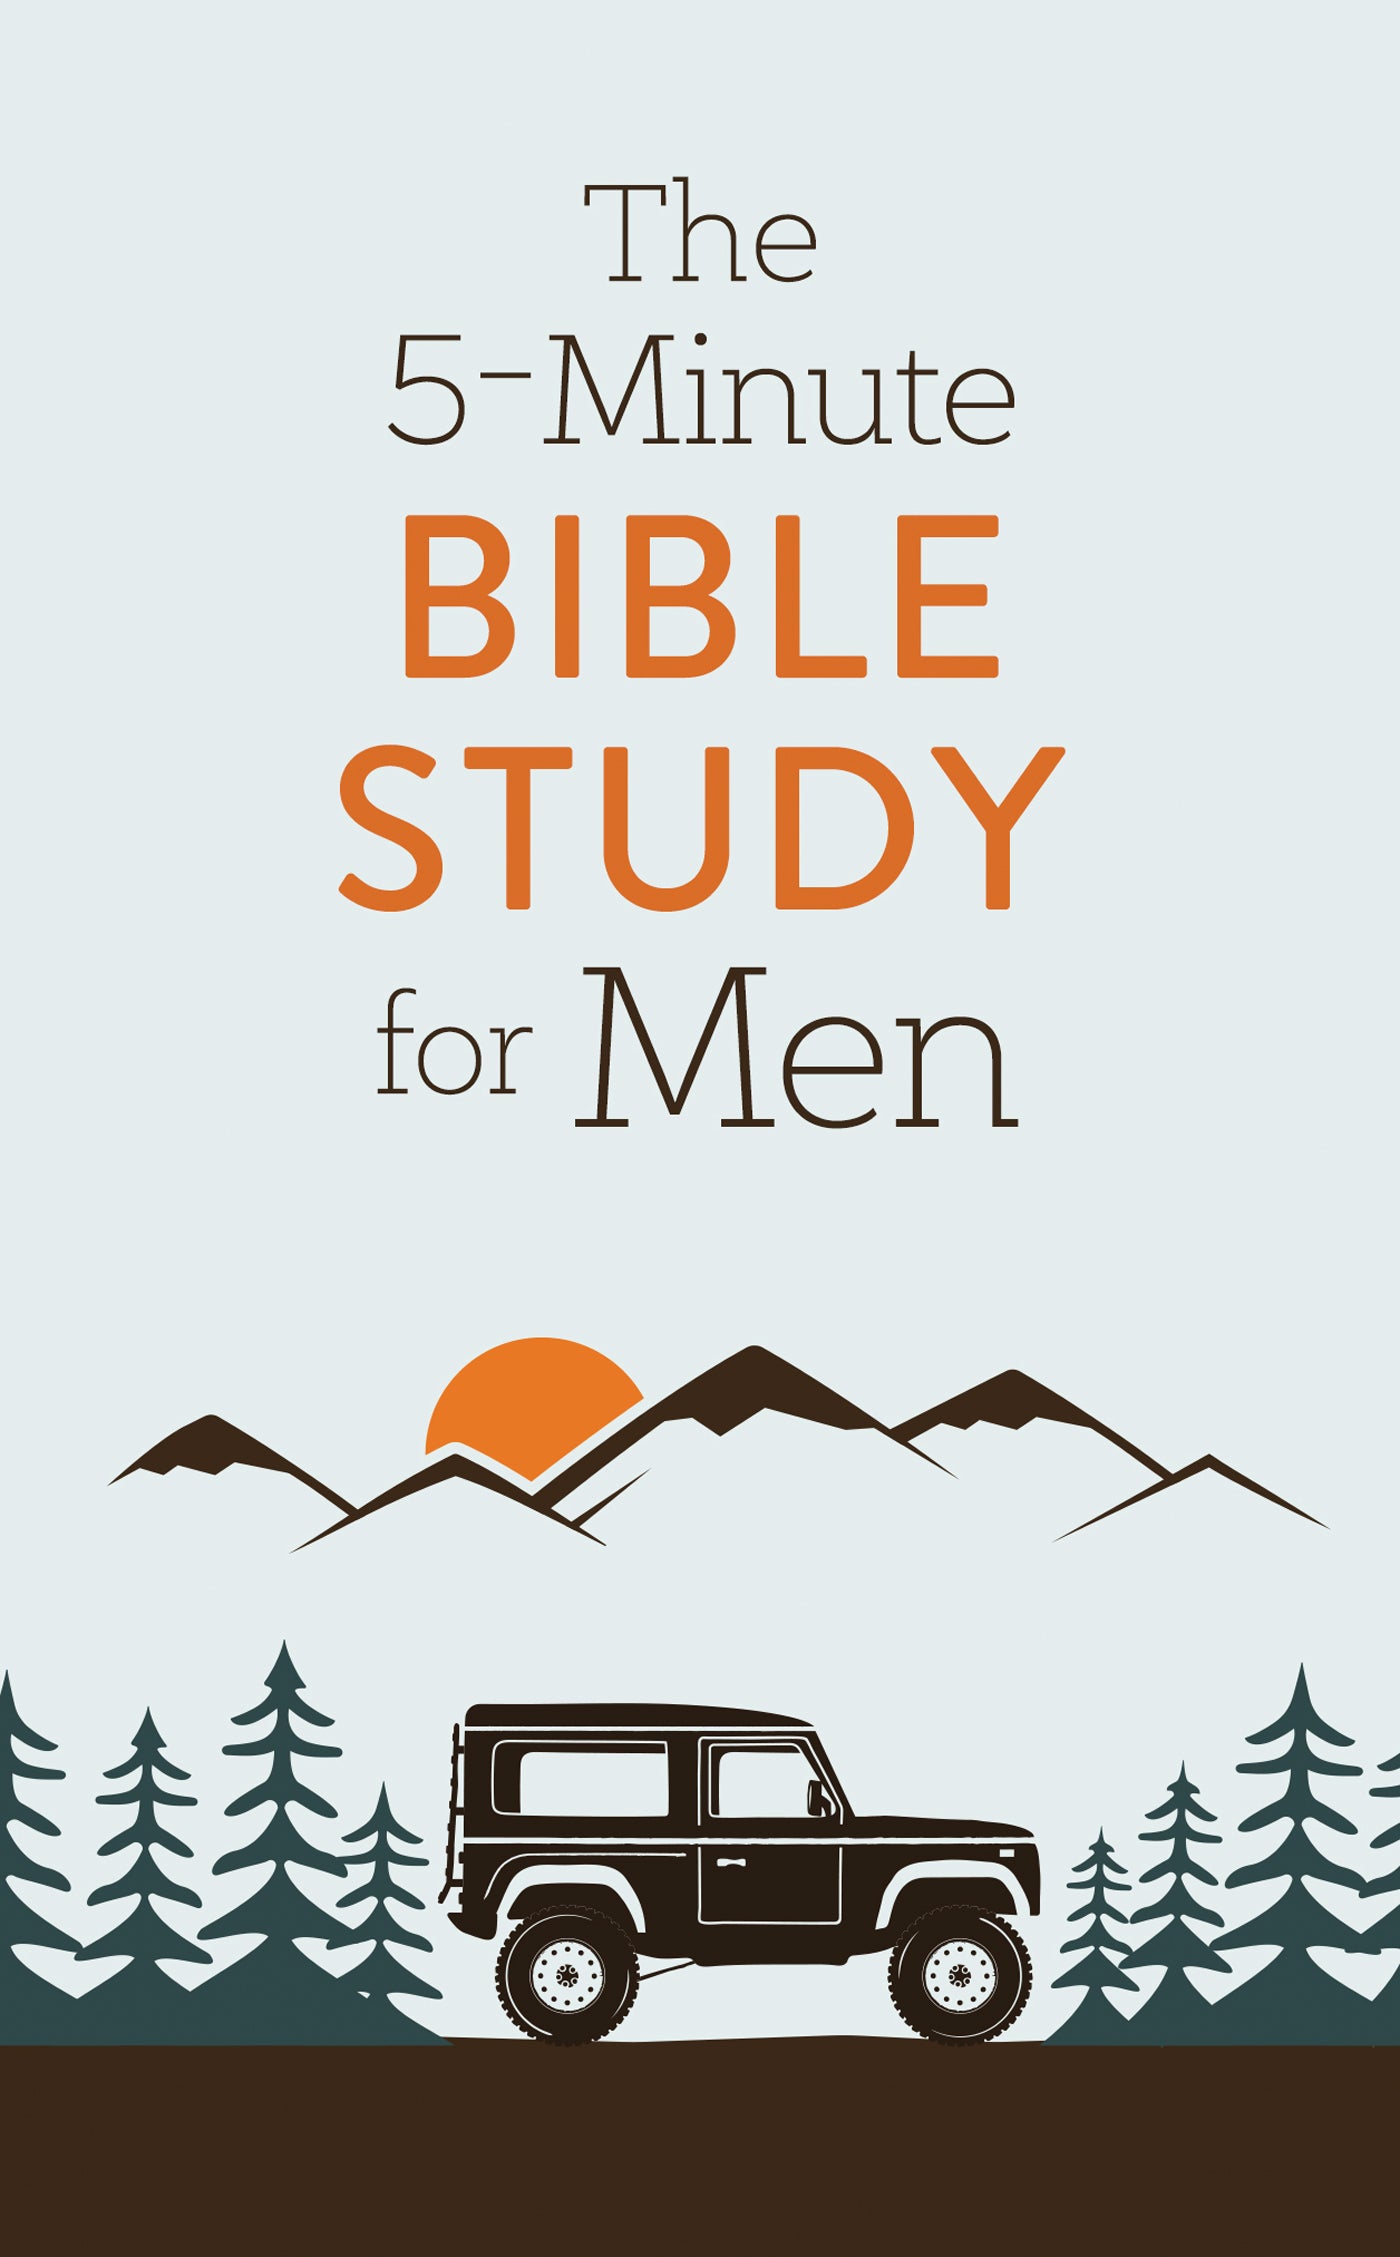 The 5-Minute Bible Study for Men - Mercantile Mountain